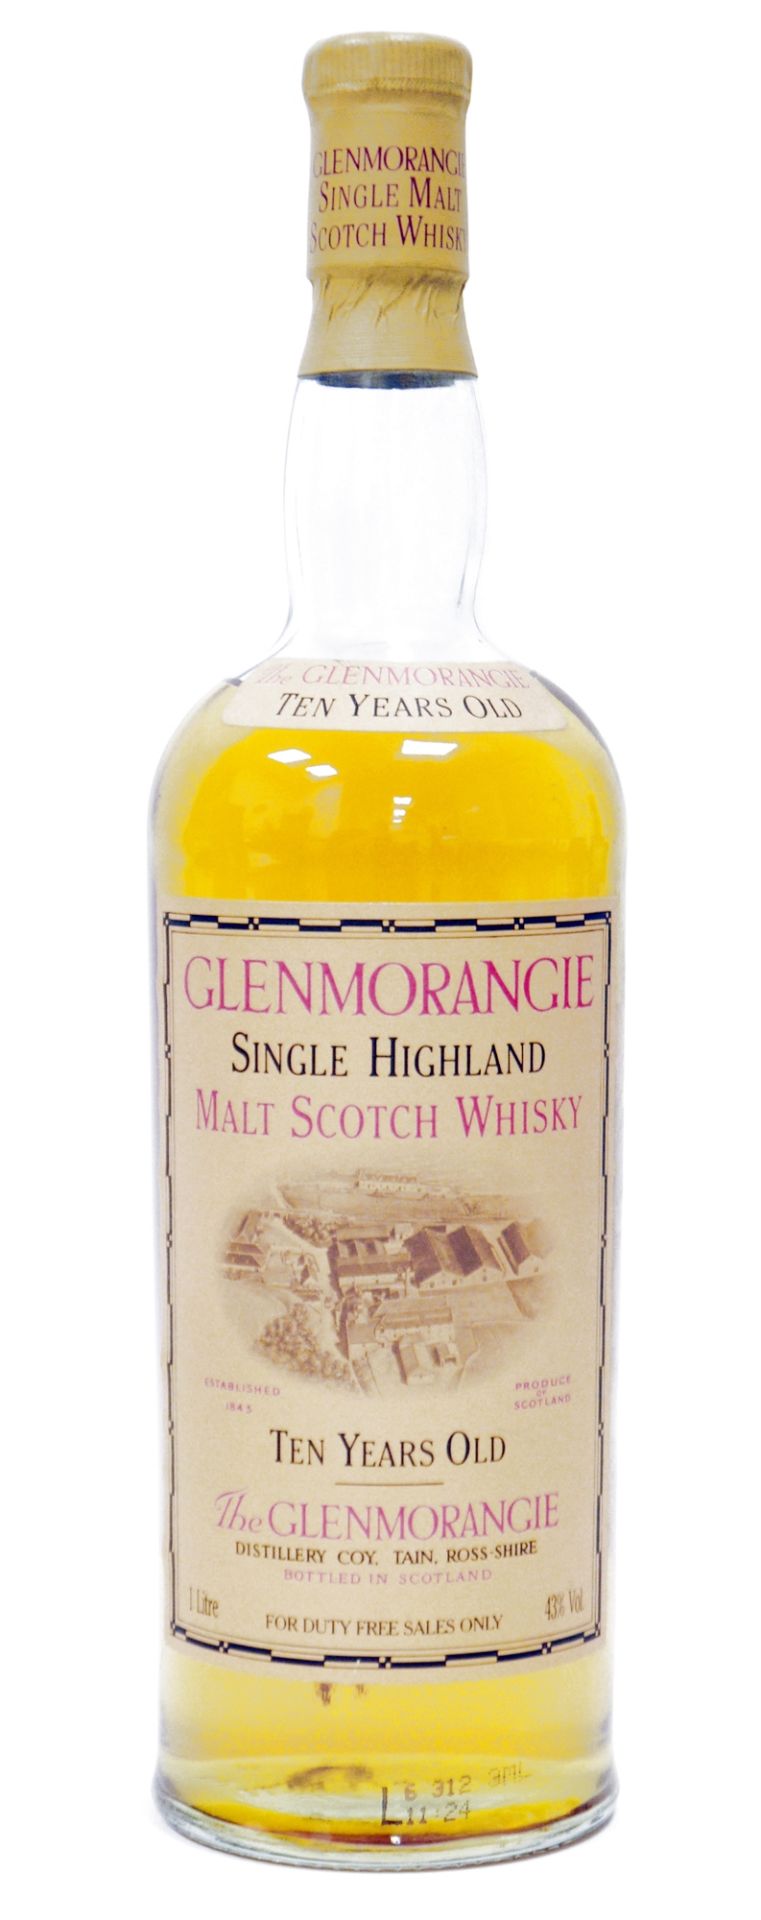 Glenmorangie 10 year old single highland malt Scotch whisky, c.1990's, duty free bottling, 1